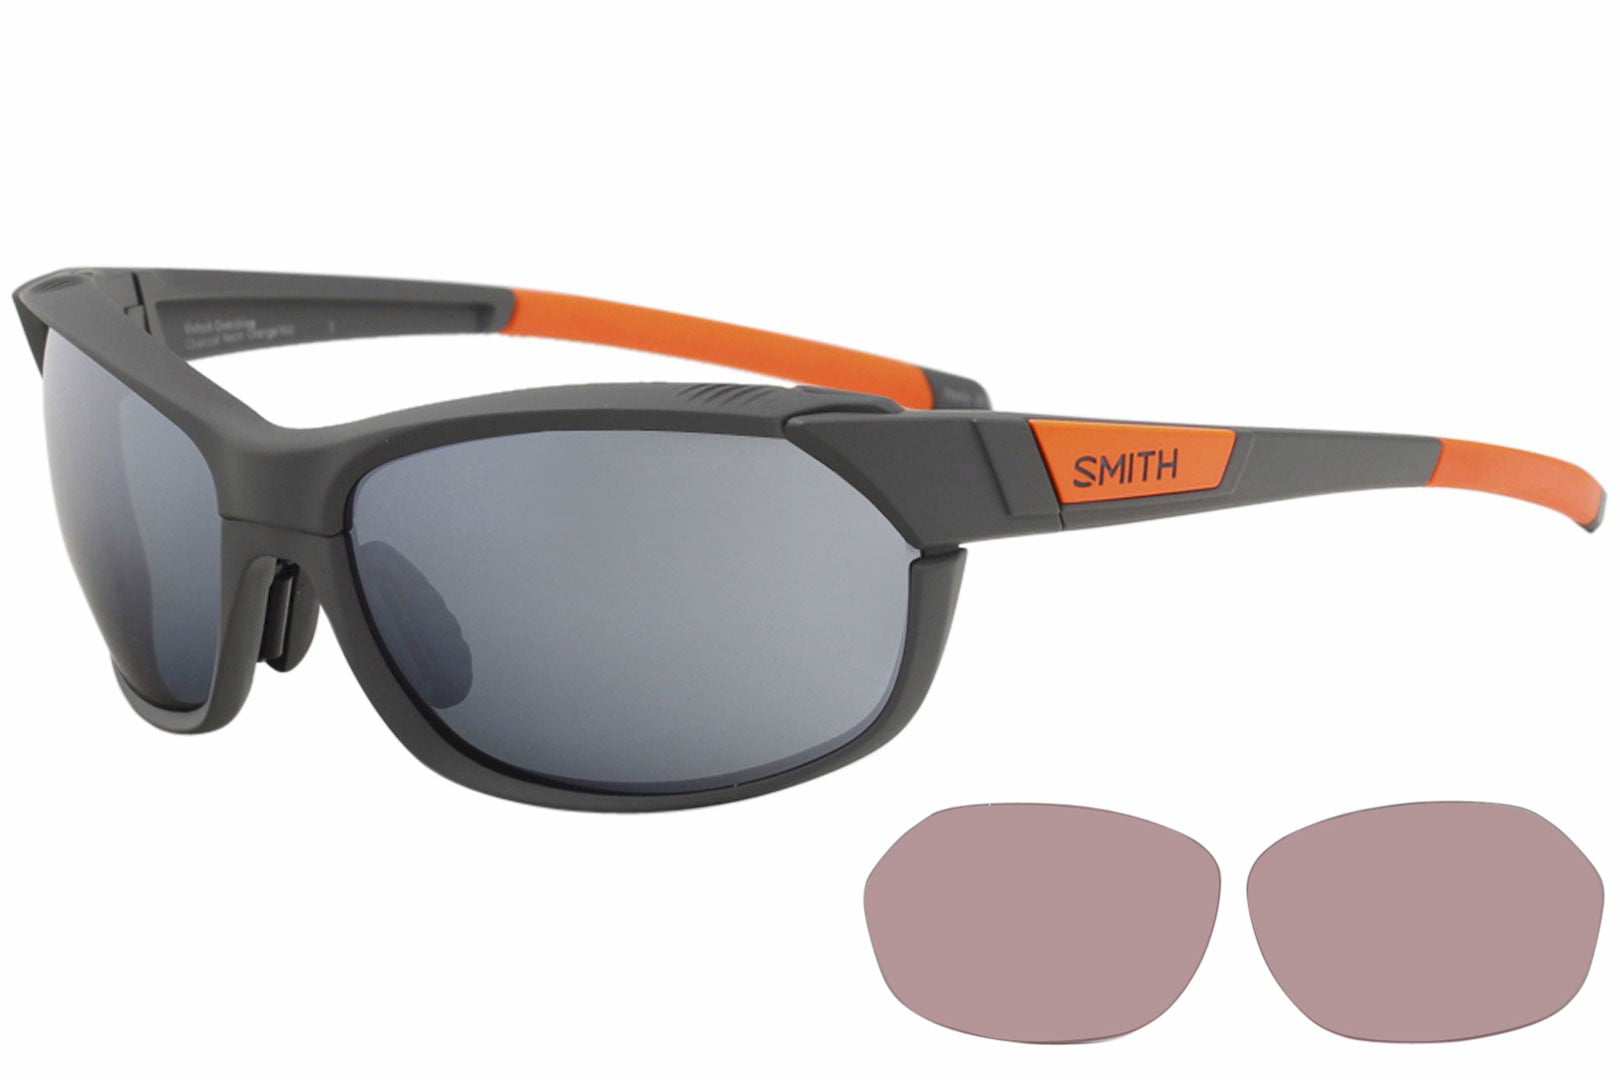 SMITH-OVERDRIVE/N 0NVJ/QB Oval Sunglasses Gray/Orange Gray